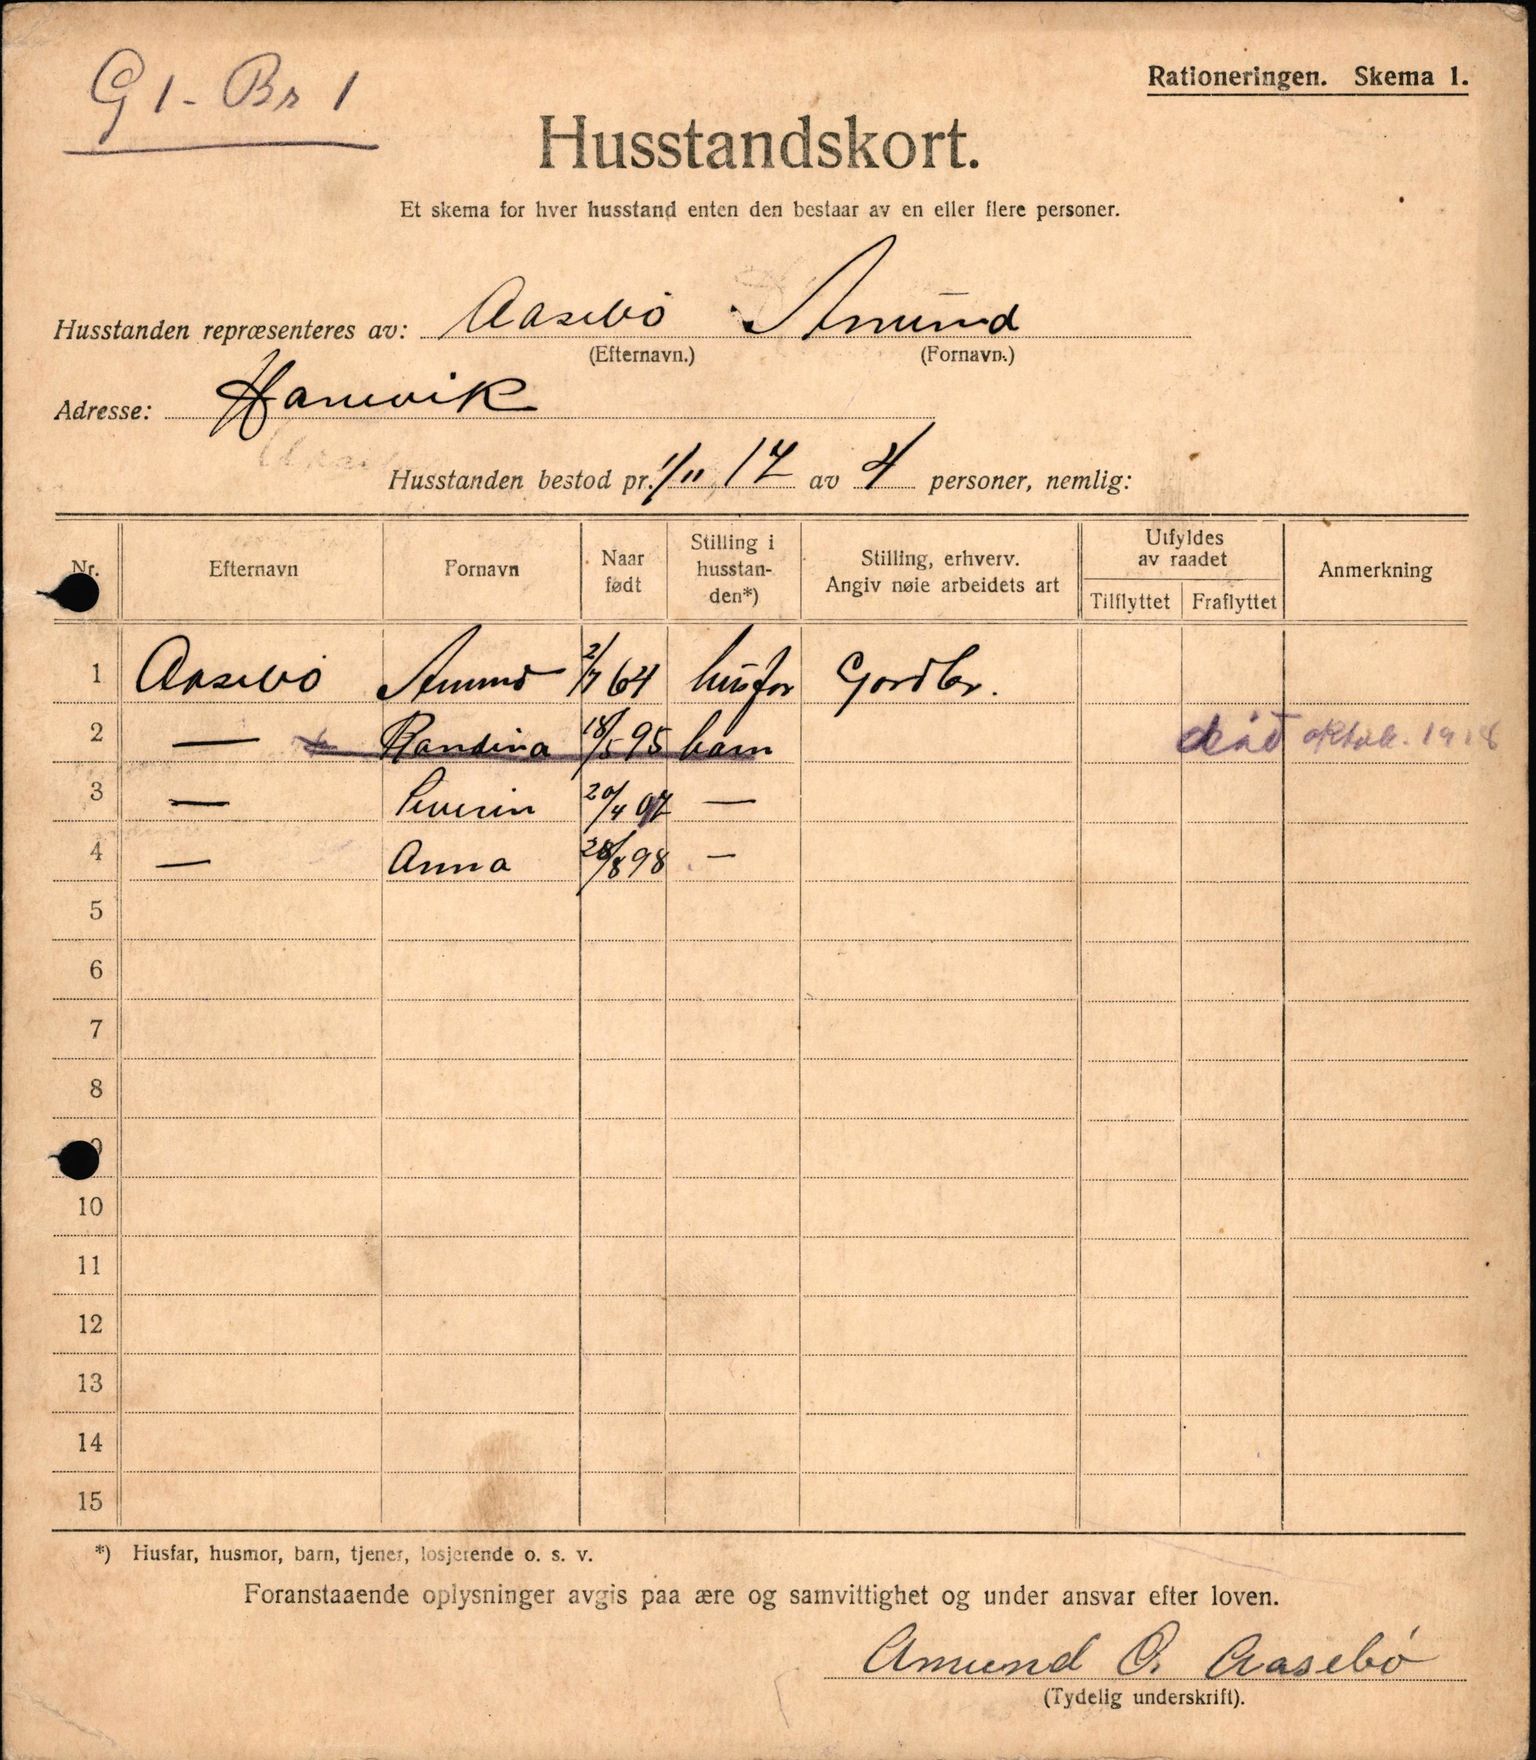 IKAH, Meland kommune, Provianteringsrådet, Husstander per 01.11.1917, 1917-1918, p. 1